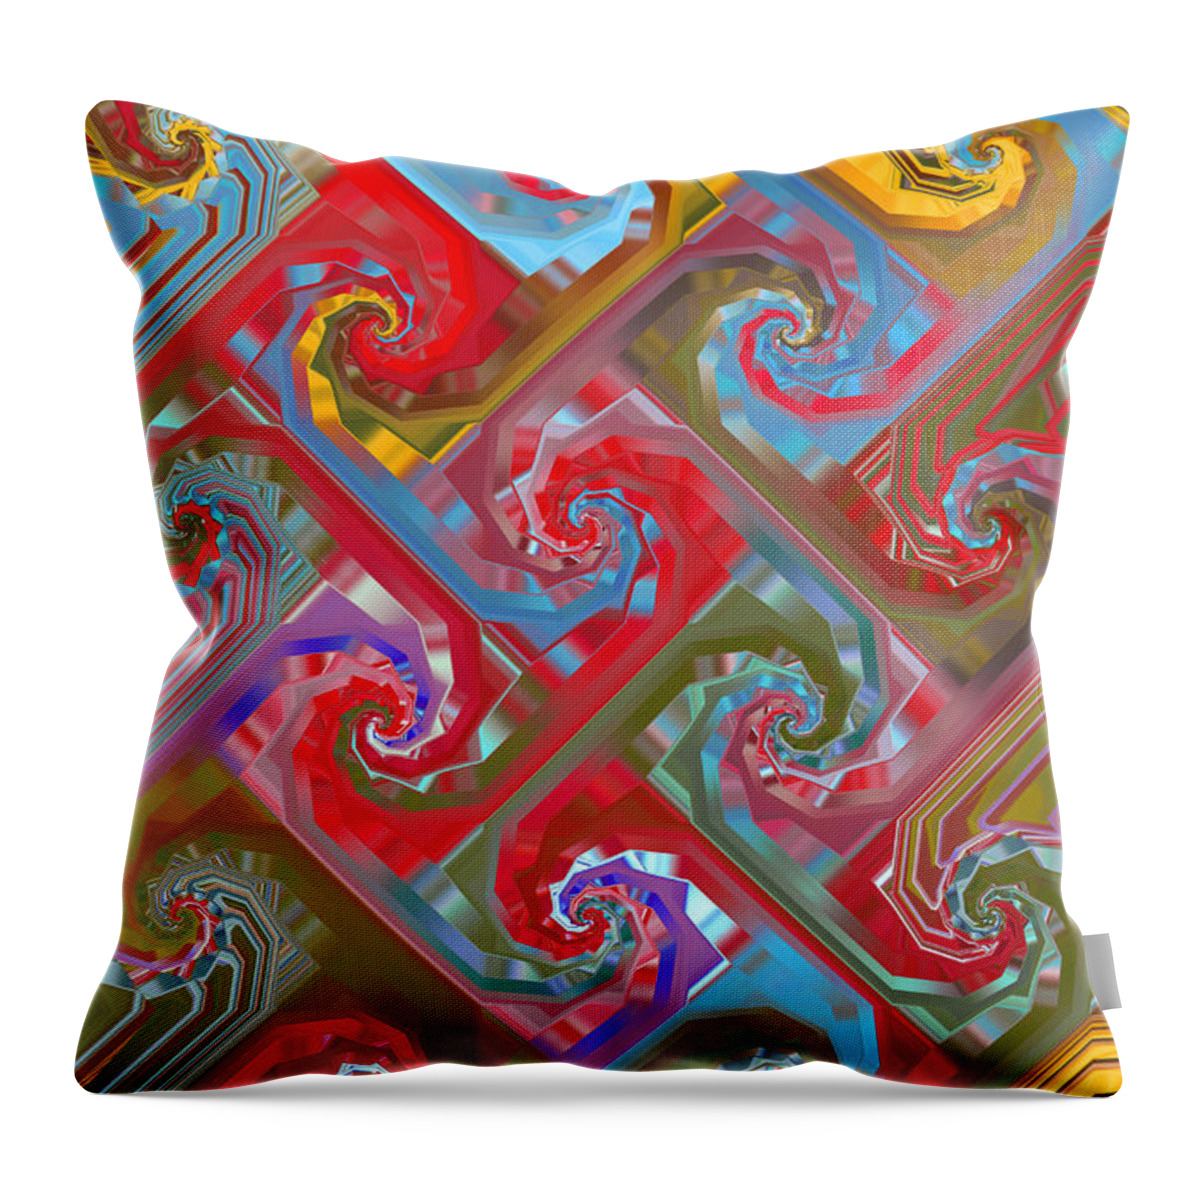 Digital Photo Art Throw Pillow featuring the digital art Tessellation by Mariarosa Rockefeller